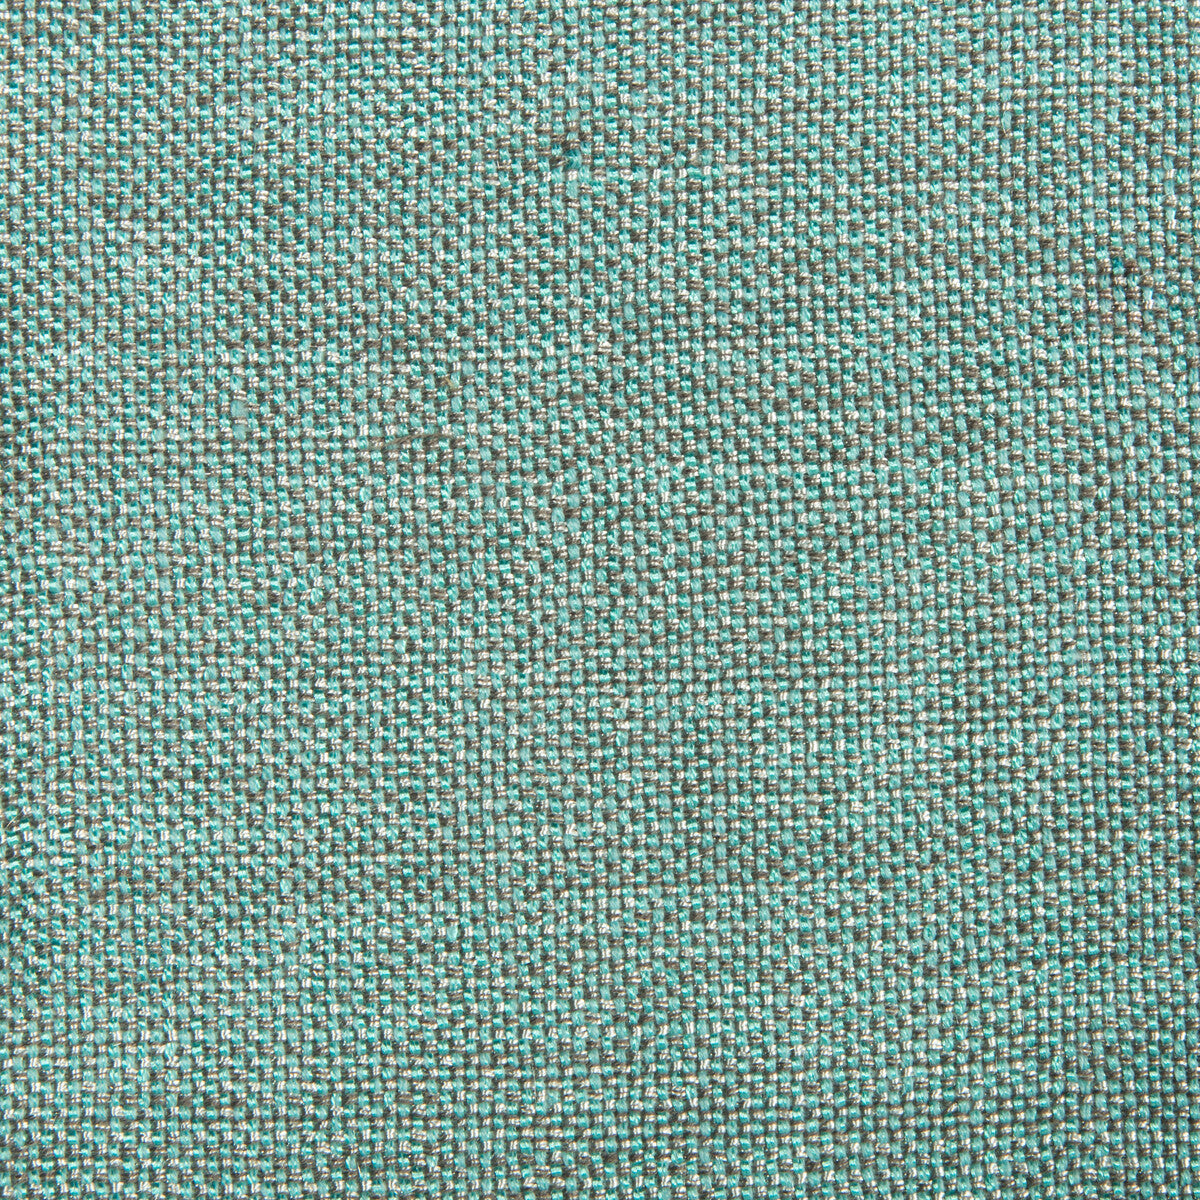 Kravet Smart fabric in 34939-1311 color - pattern 34939.1311.0 - by Kravet Smart